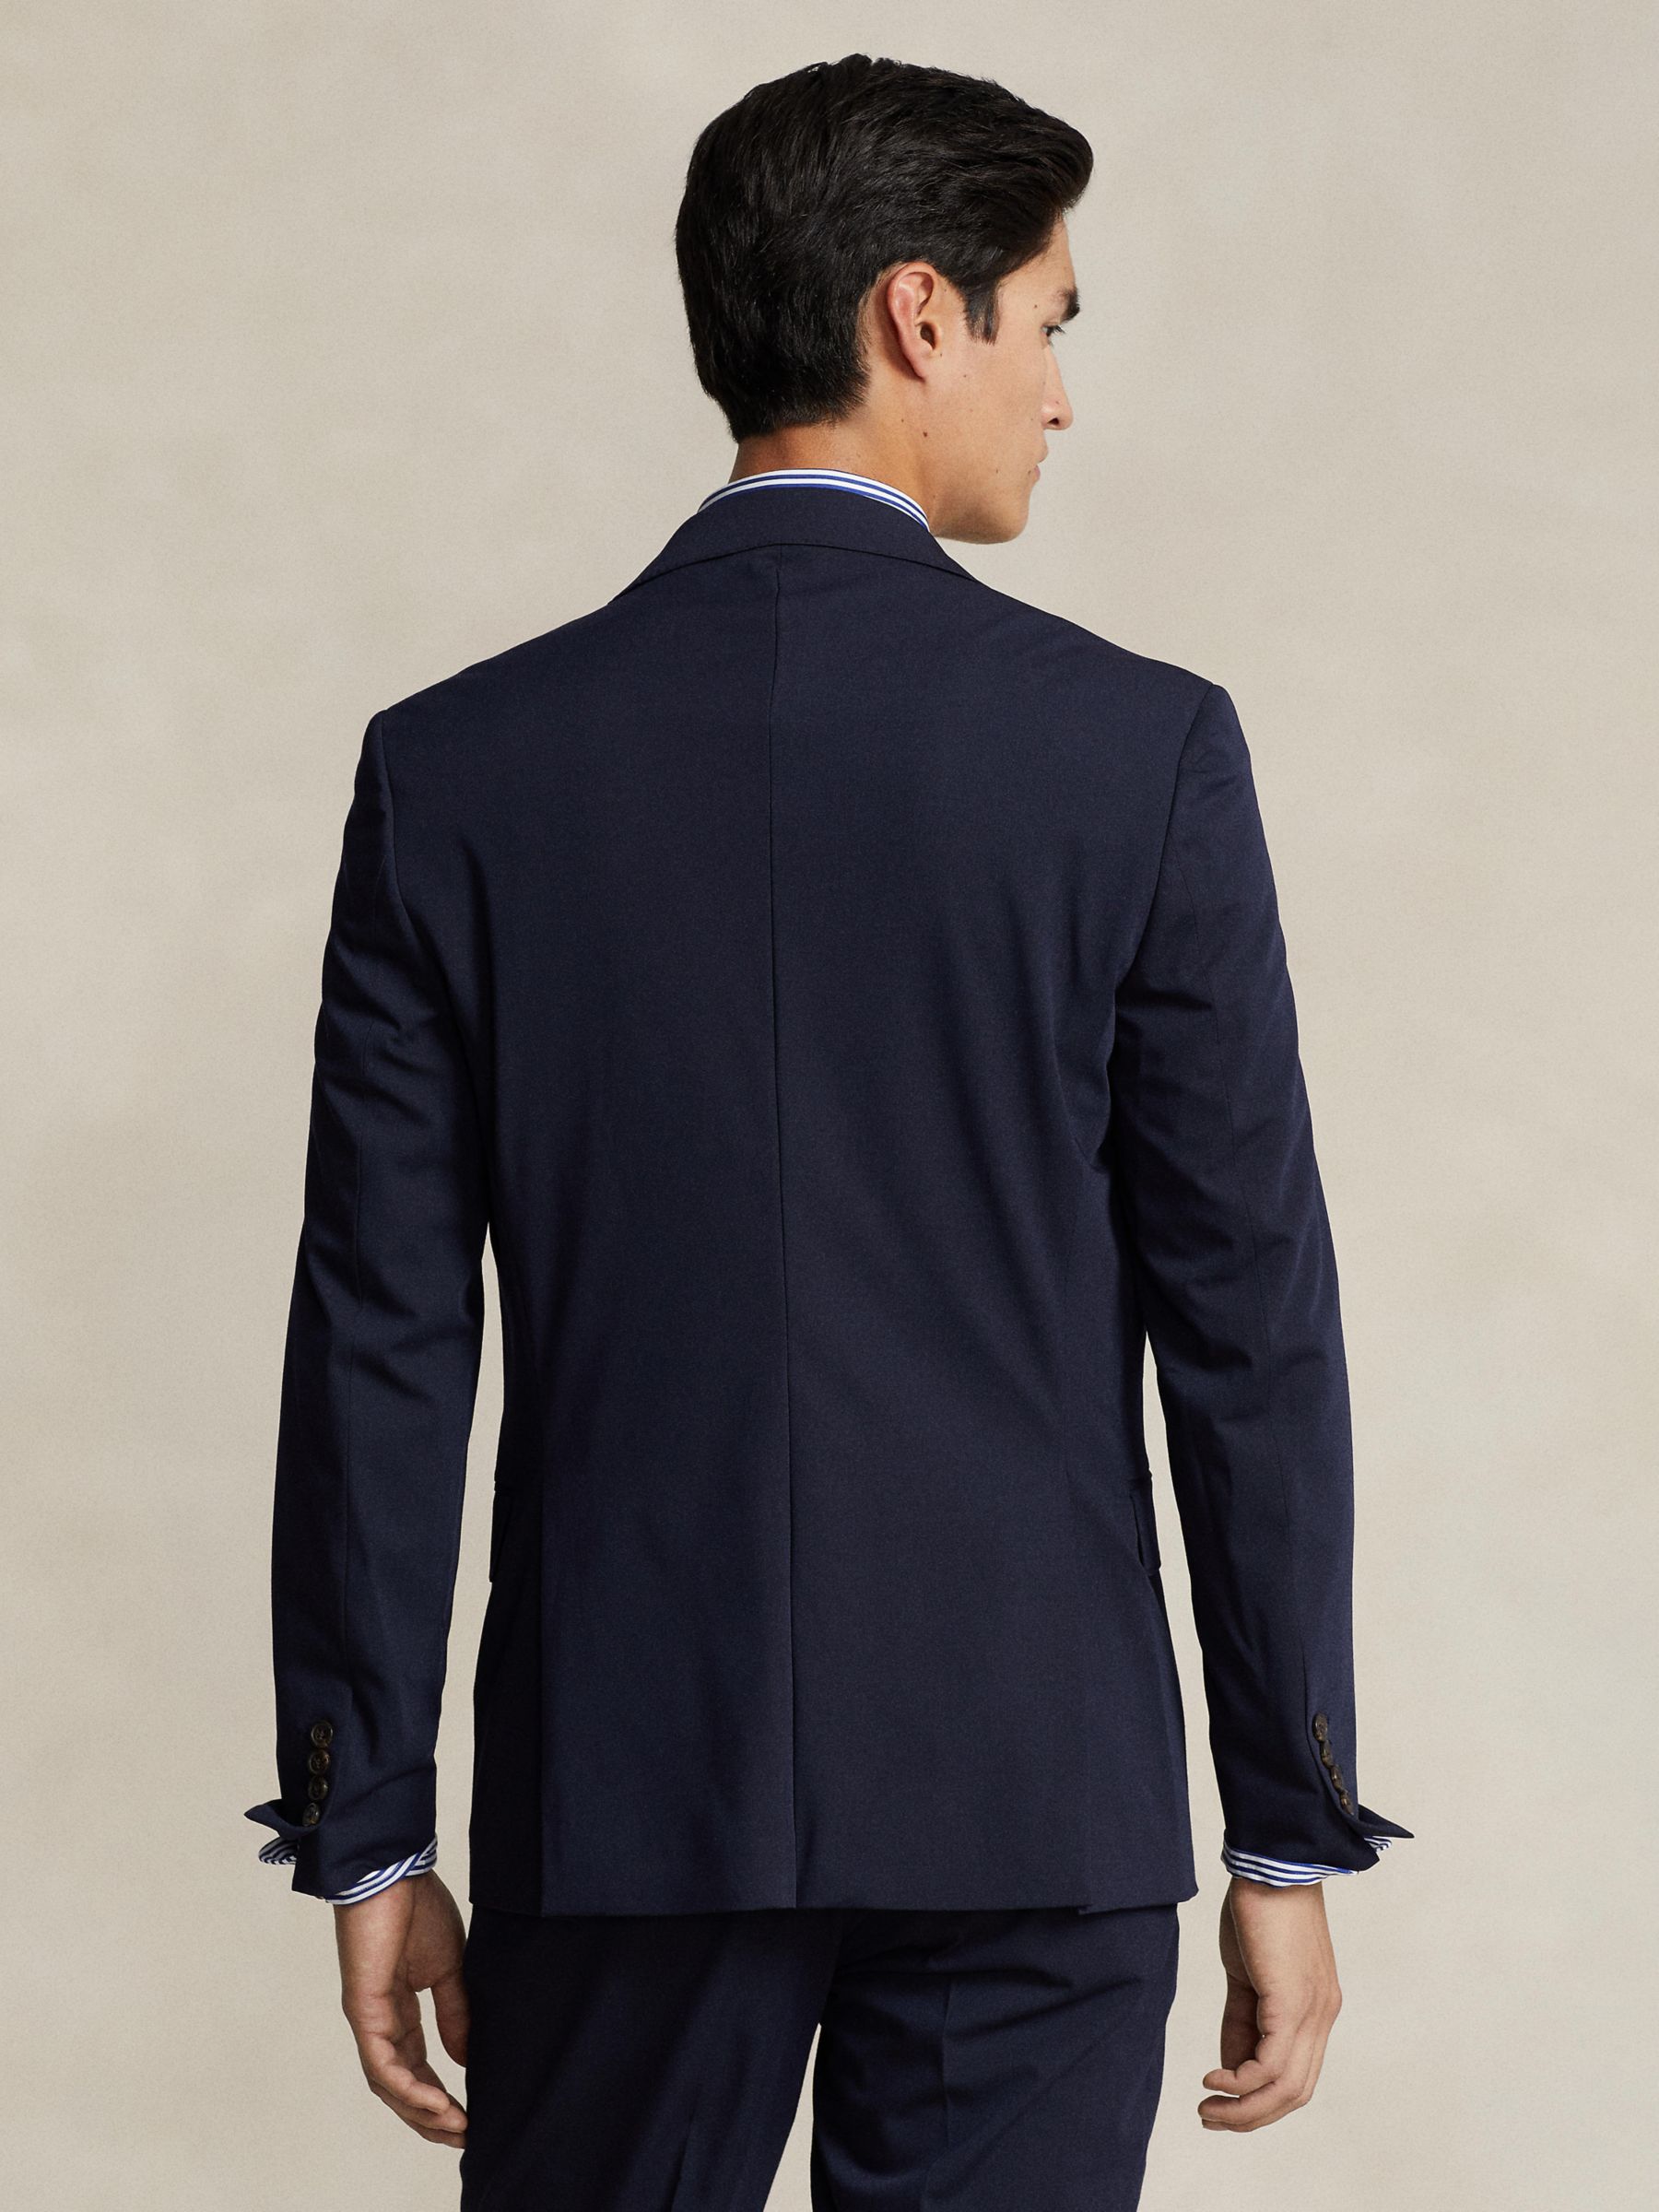 Buy Polo Ralph Lauren Tailored Fit Suit Jacket Online at johnlewis.com